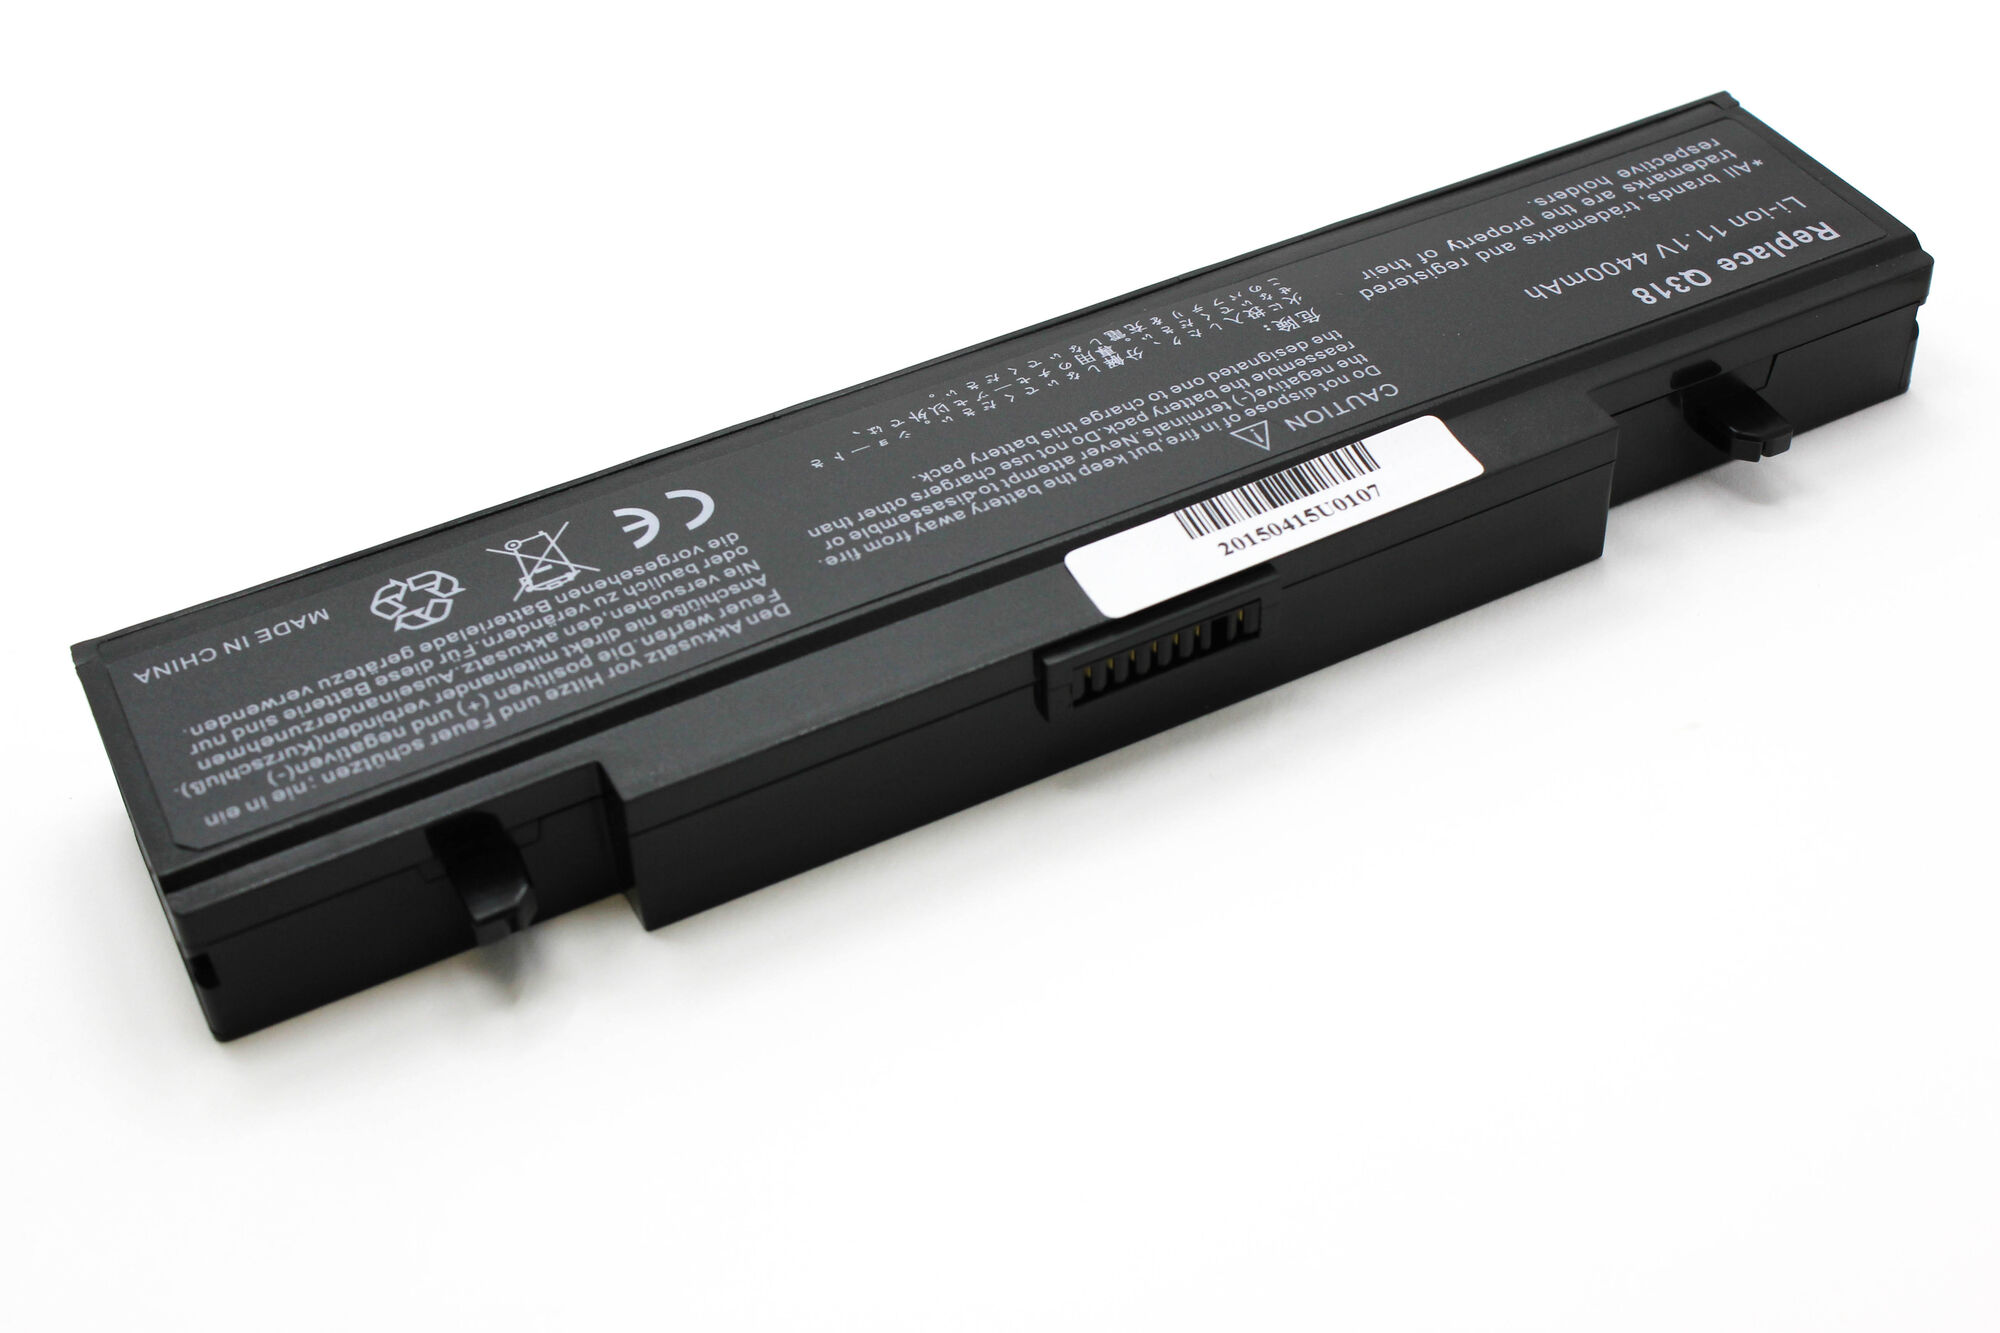 Аккумулятор для Samsung R425 R428 R430 R520 (11.1V 4400mAh) p/n: AA-PB9NC5B, AA-PB9NC6B, AA-PB9NC6W